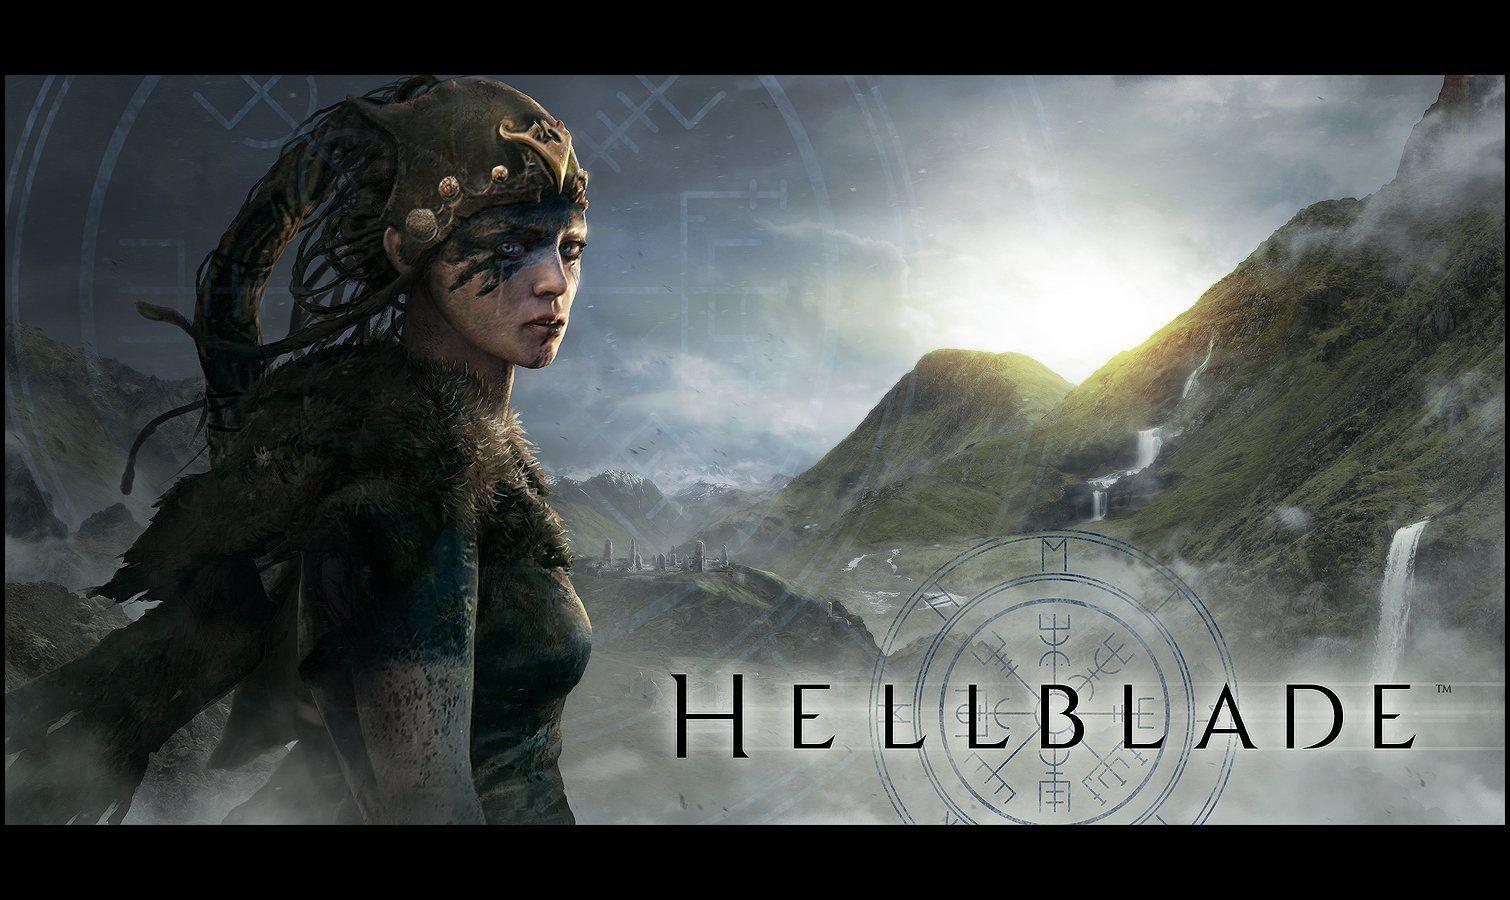 Hellblade: Senua's Sacrifice Full HD Wallpaper and Background